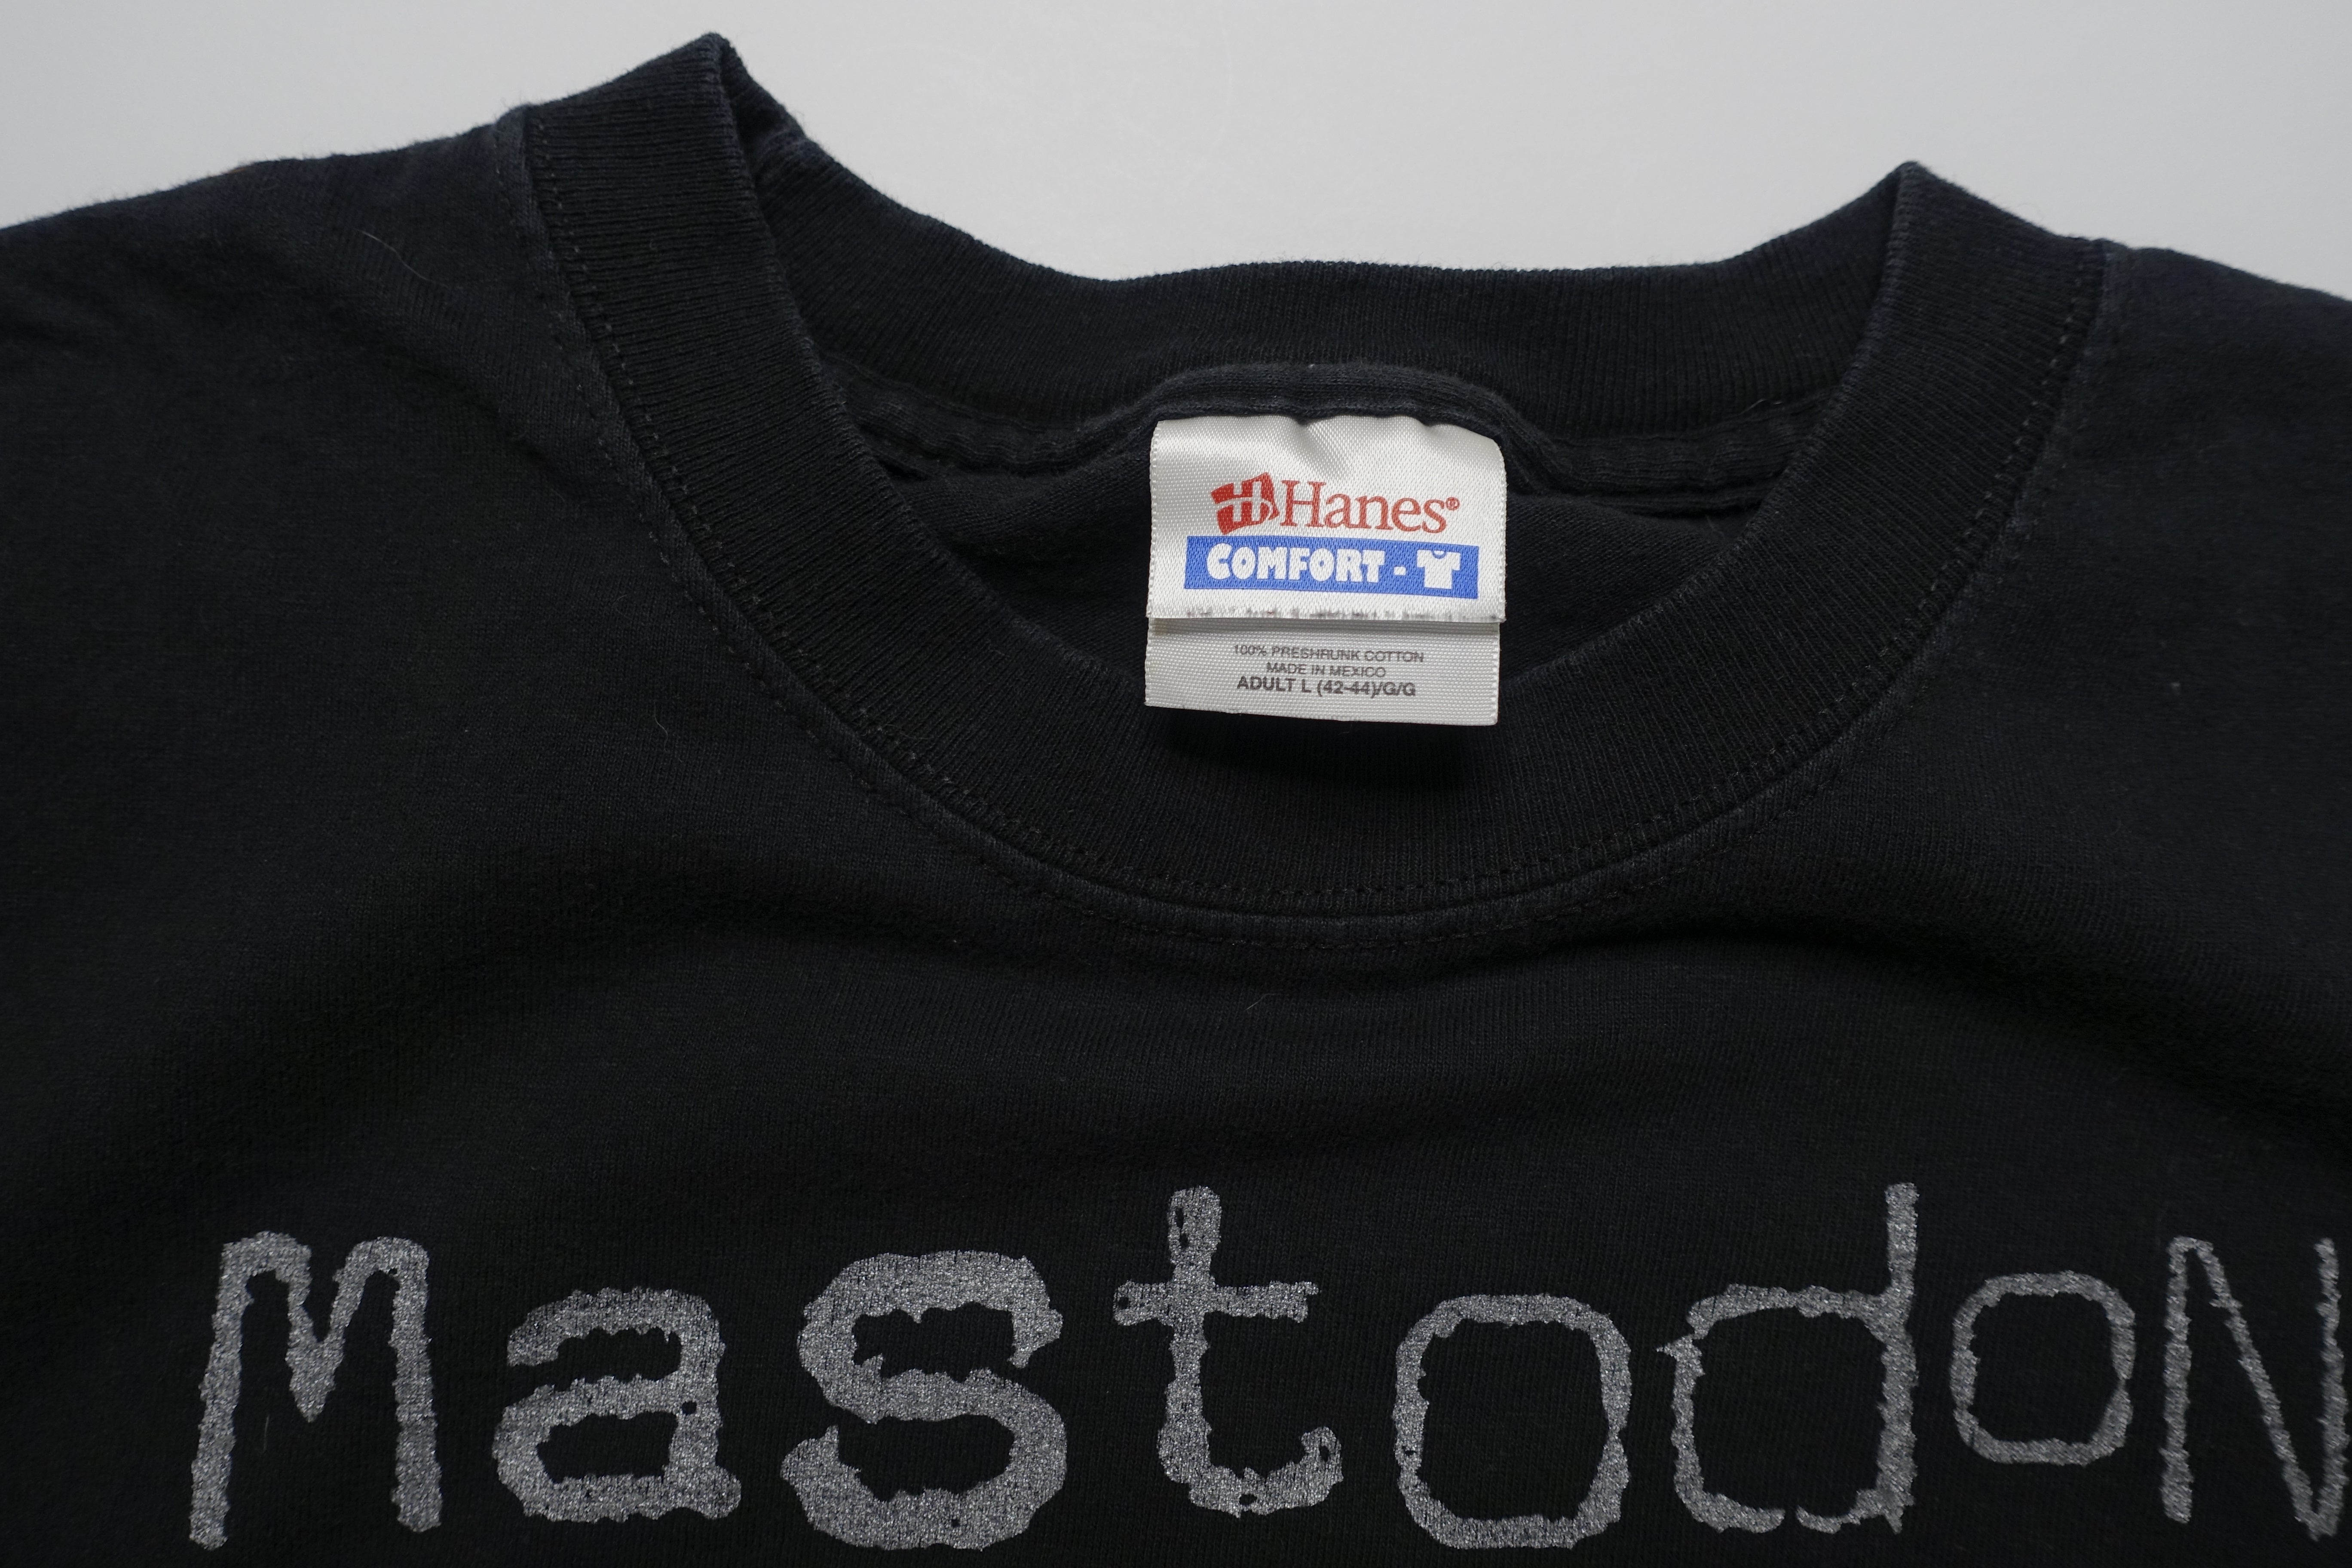 Mastodon - Cinderblock Suicide Tour Shirt Size Large